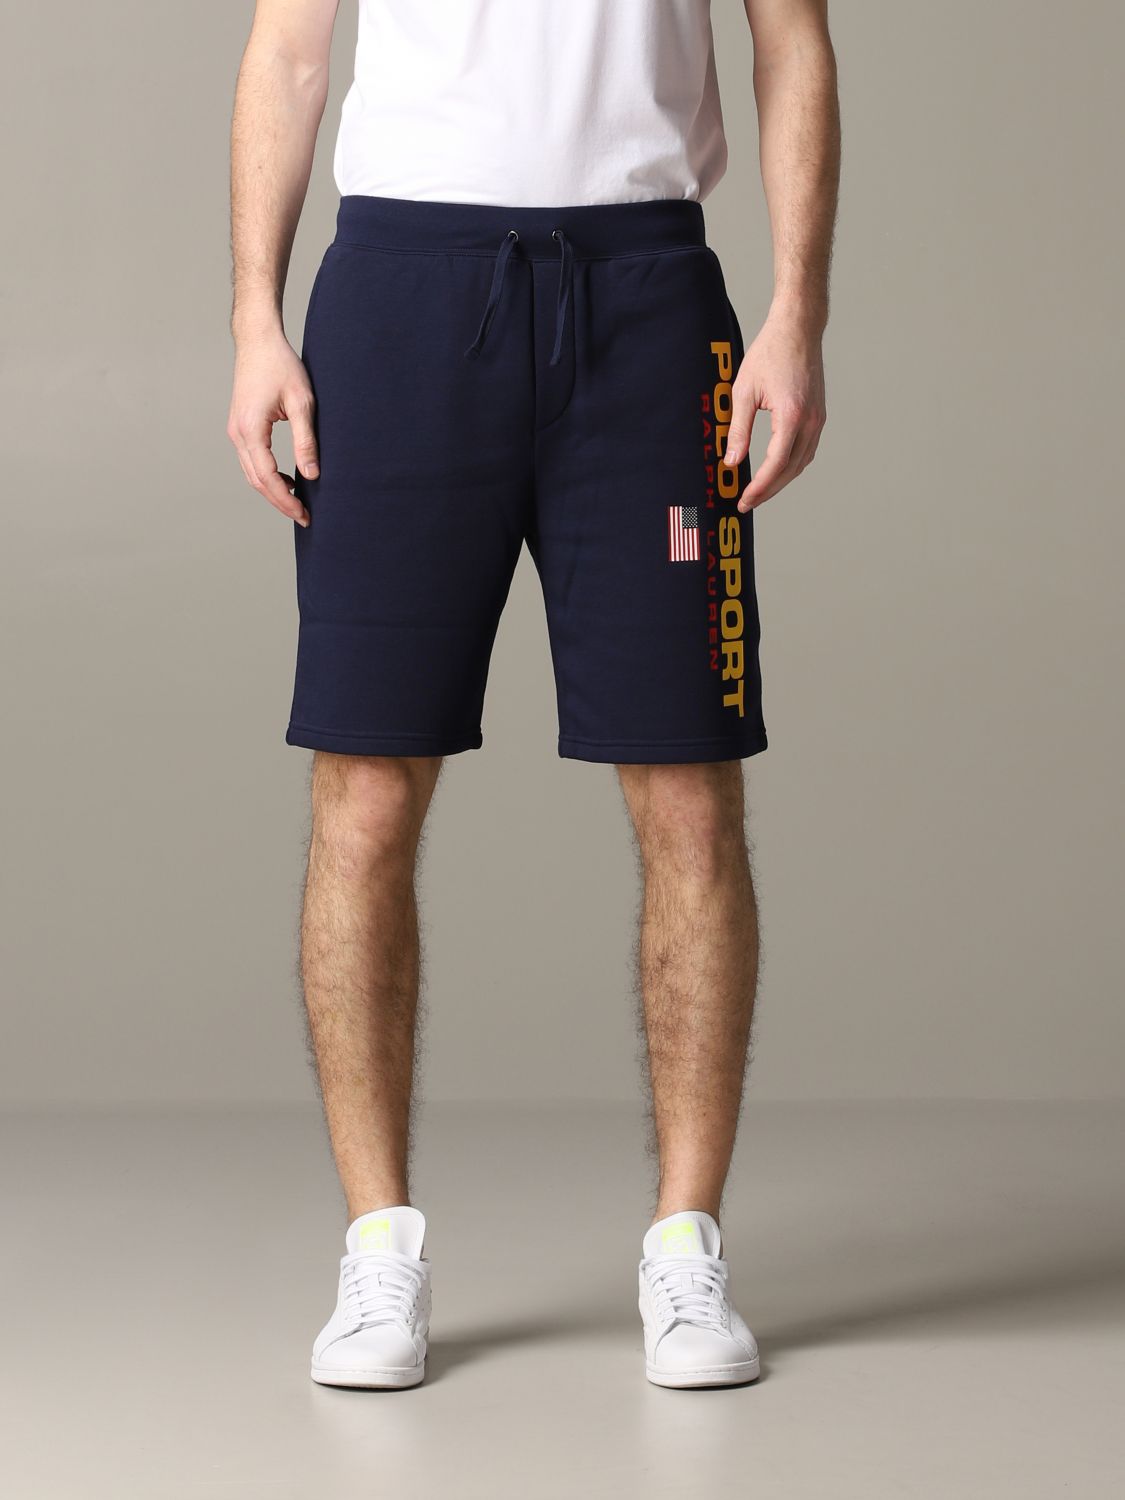 polo sport shorts mens